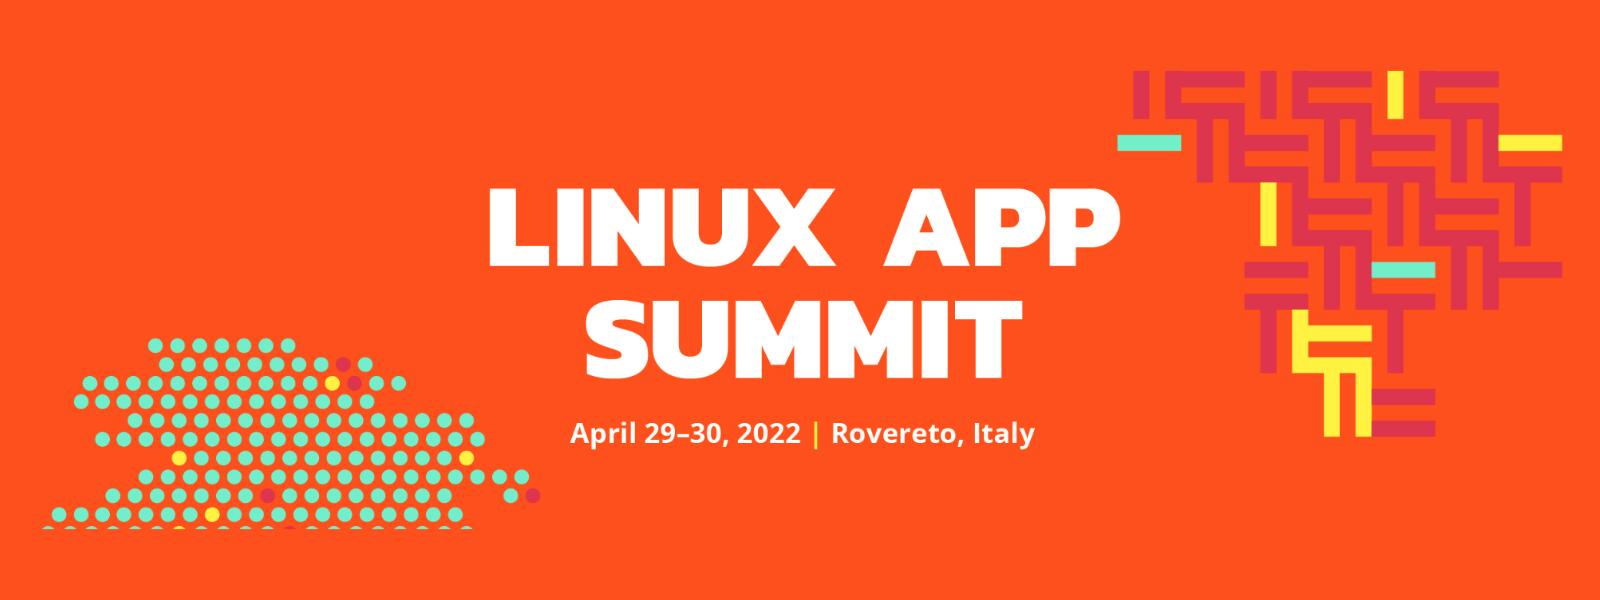 Programa de charlas de la Linux APP Summit 2022